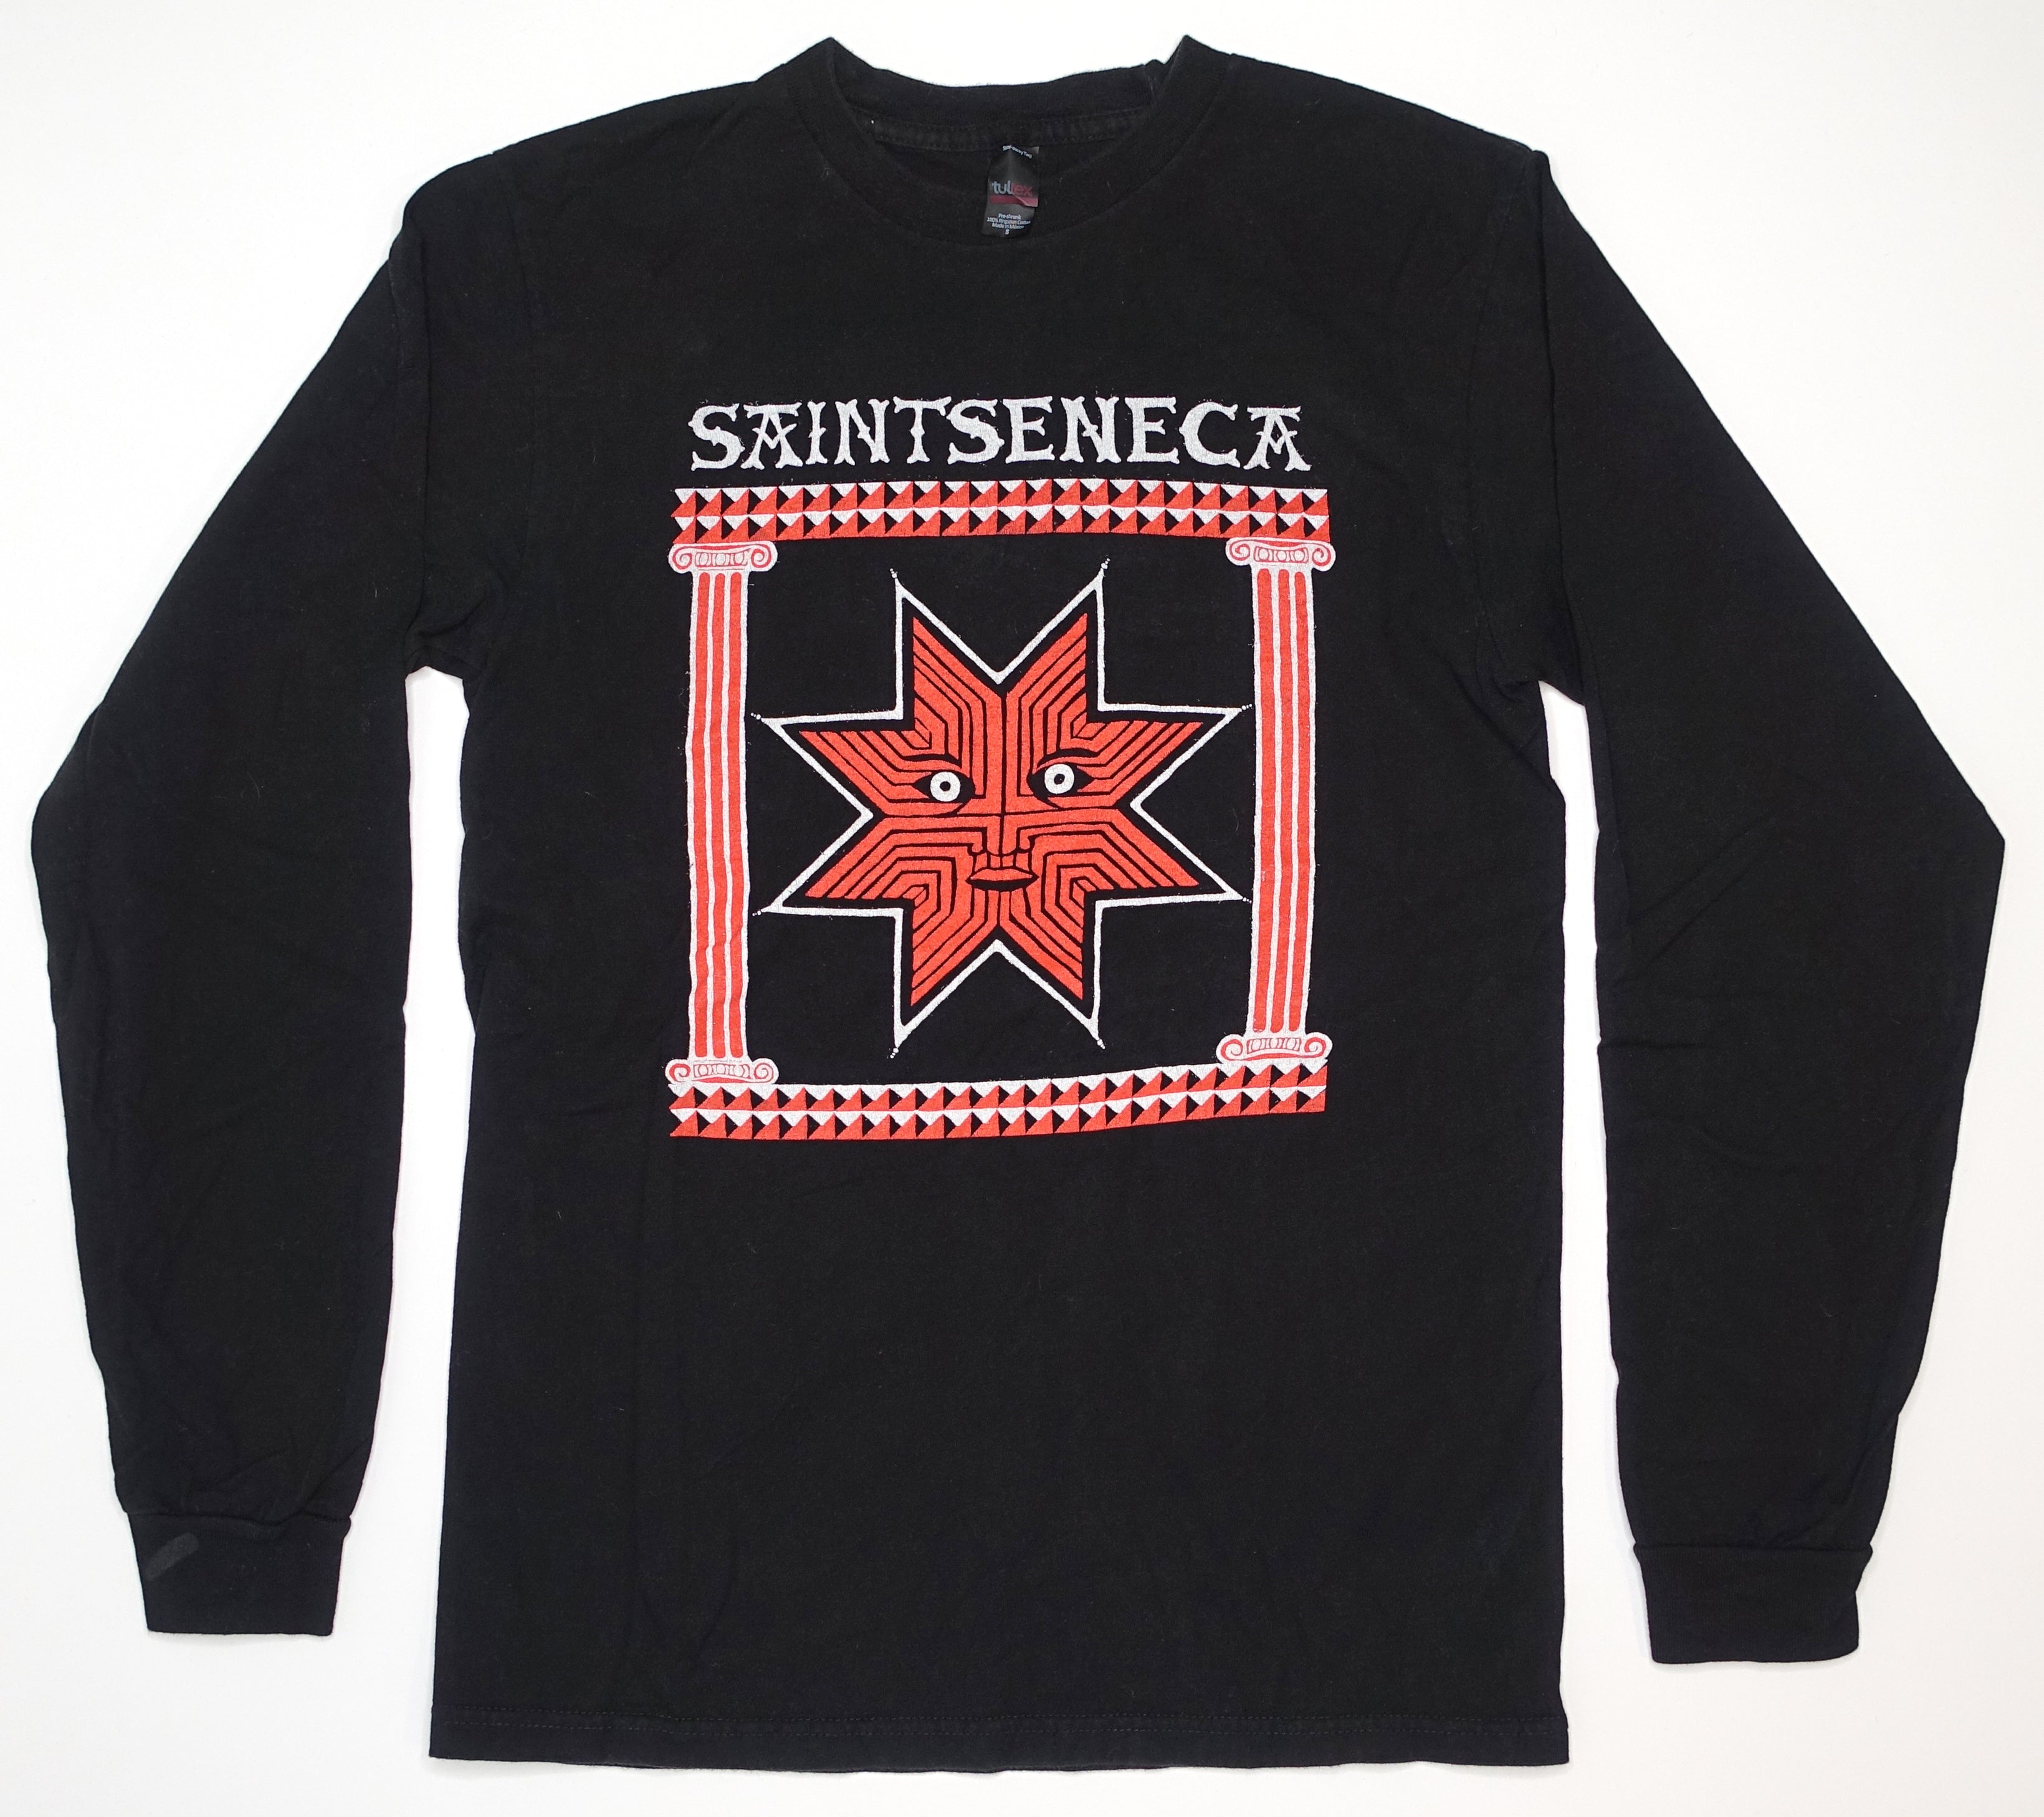 Saintseneca – Pillar Of Na 2018 Long Sleeve Shirt Size Small